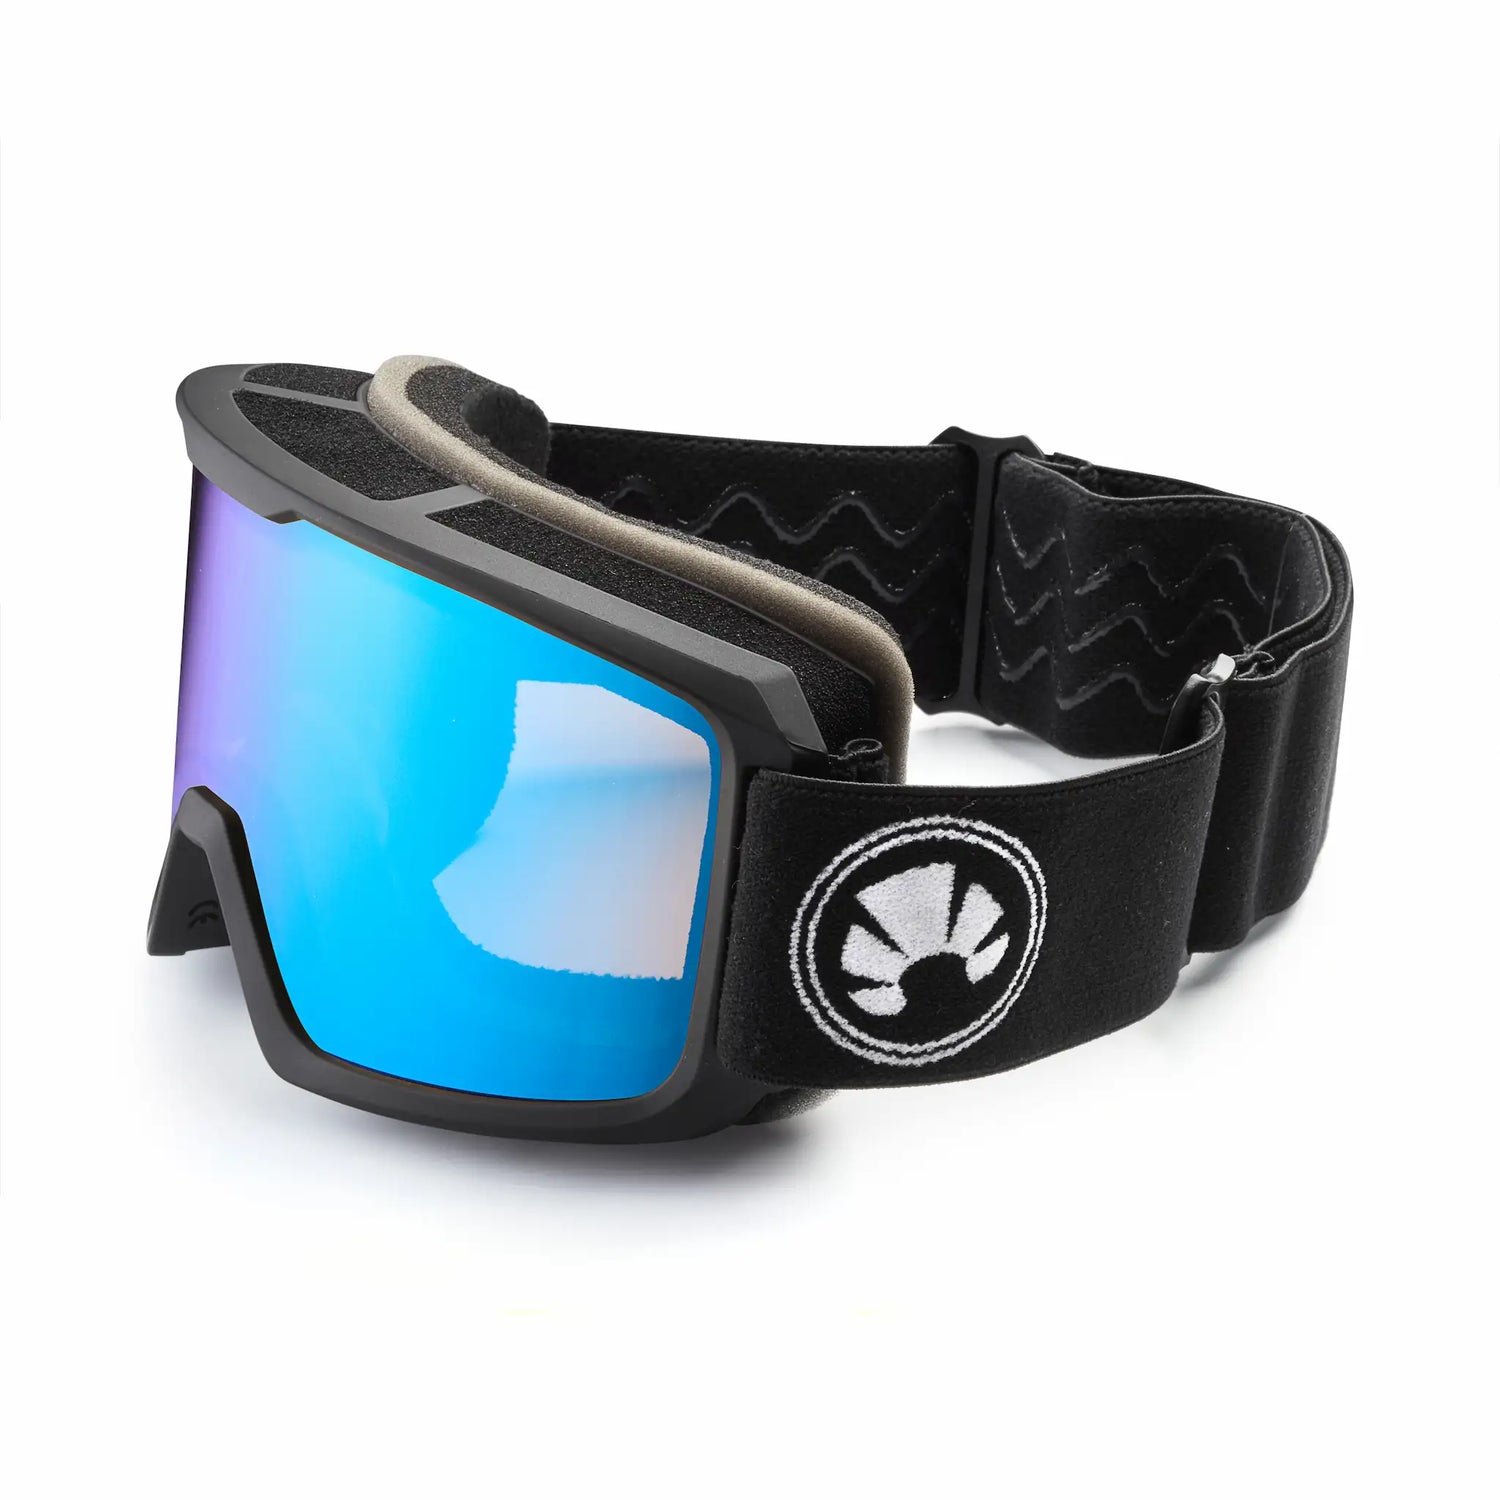 Bakedsnow shamen blue snowboard goggle